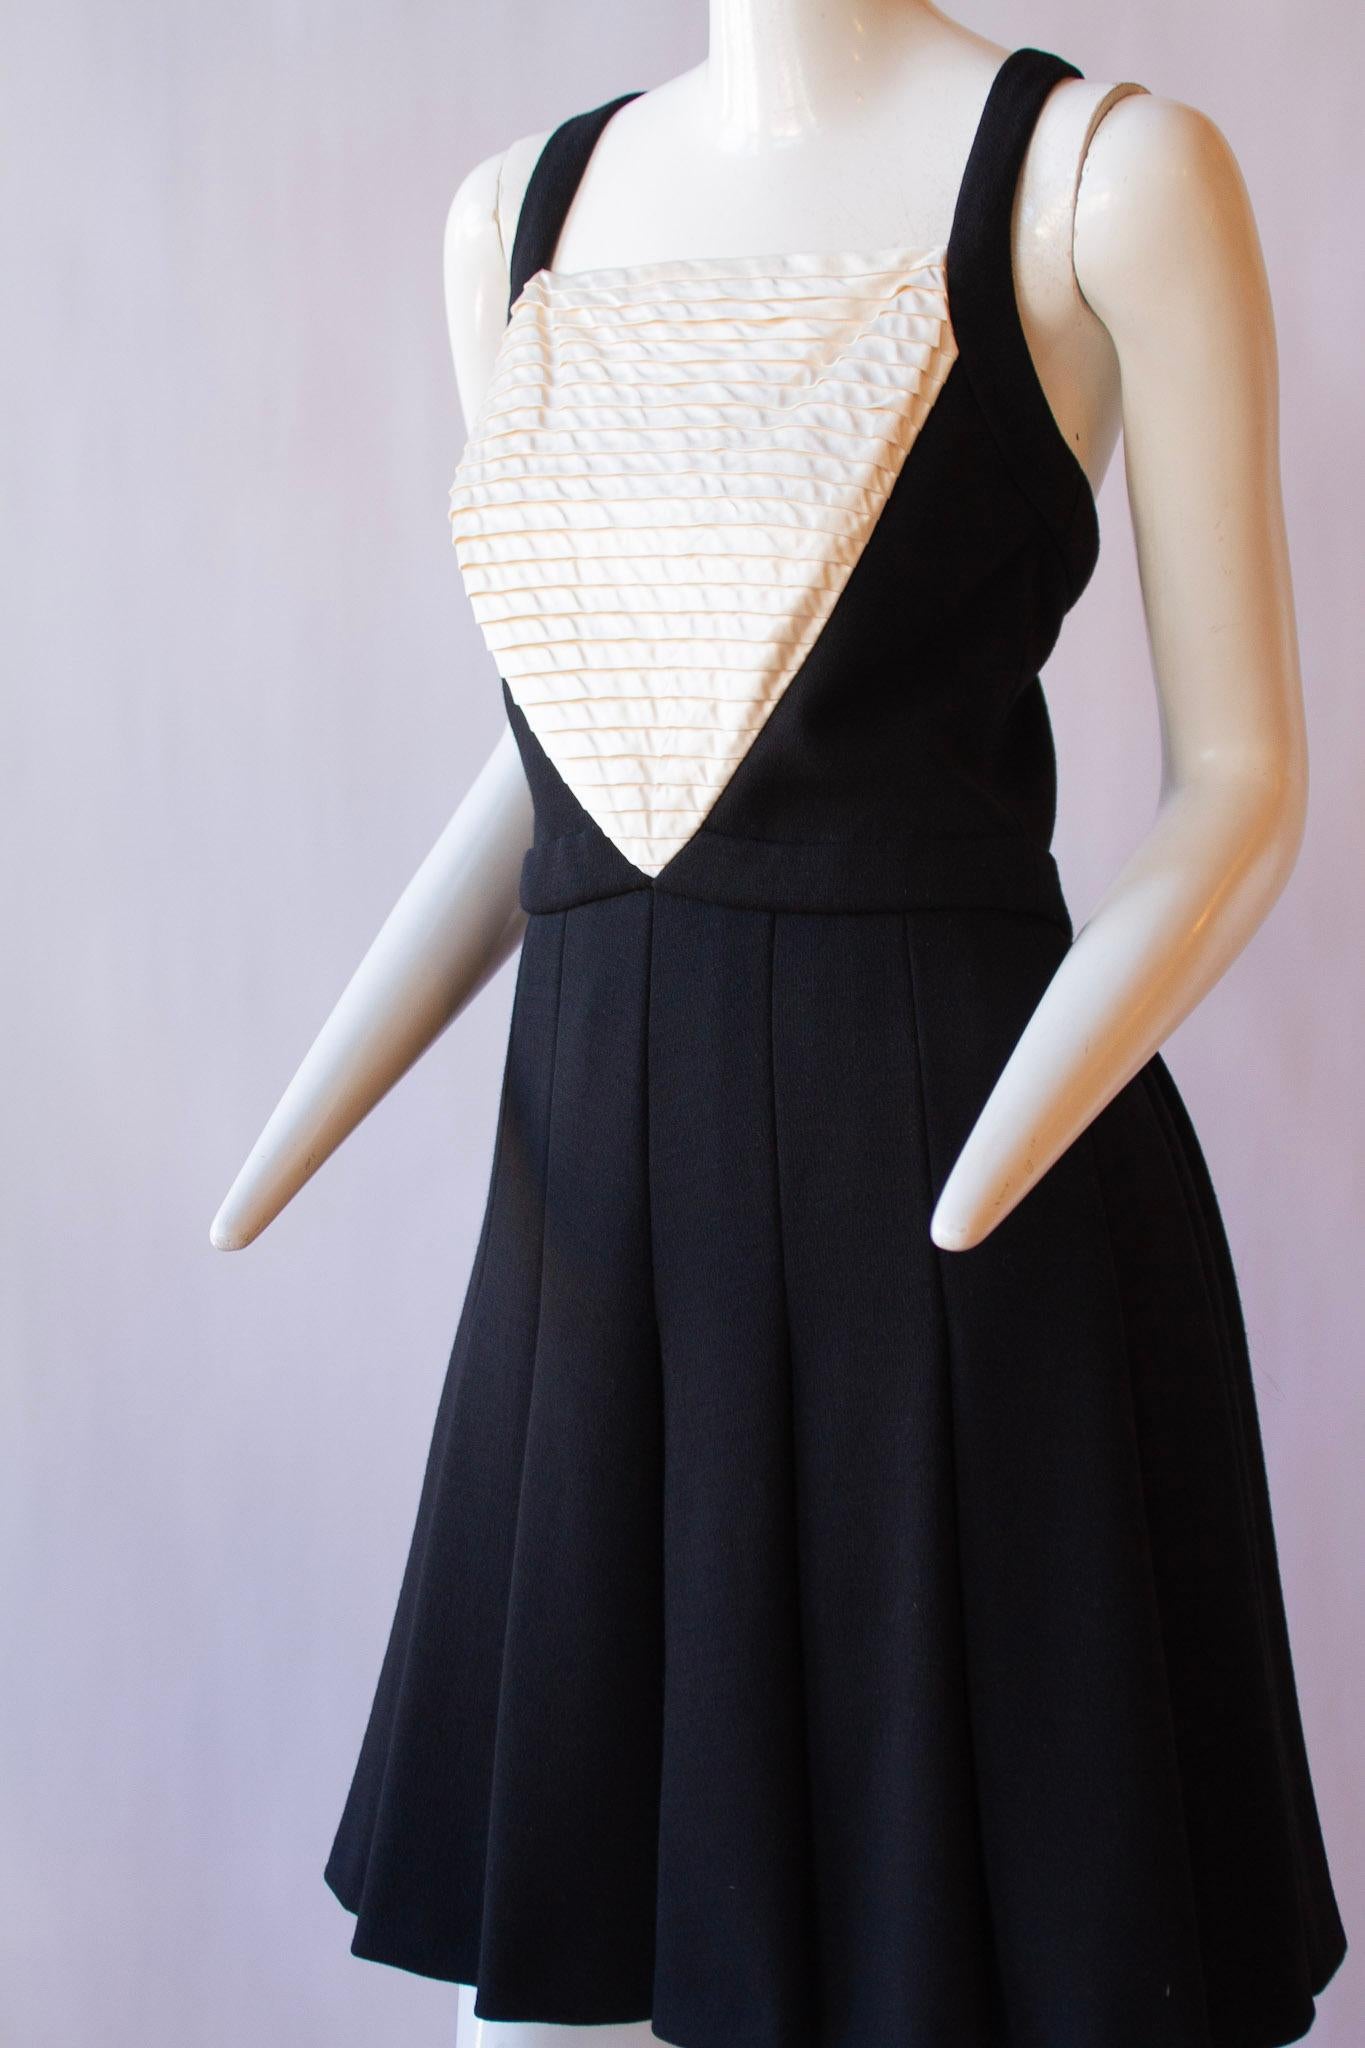 Women's Chanel Black & White Halter Dress with Pleats 